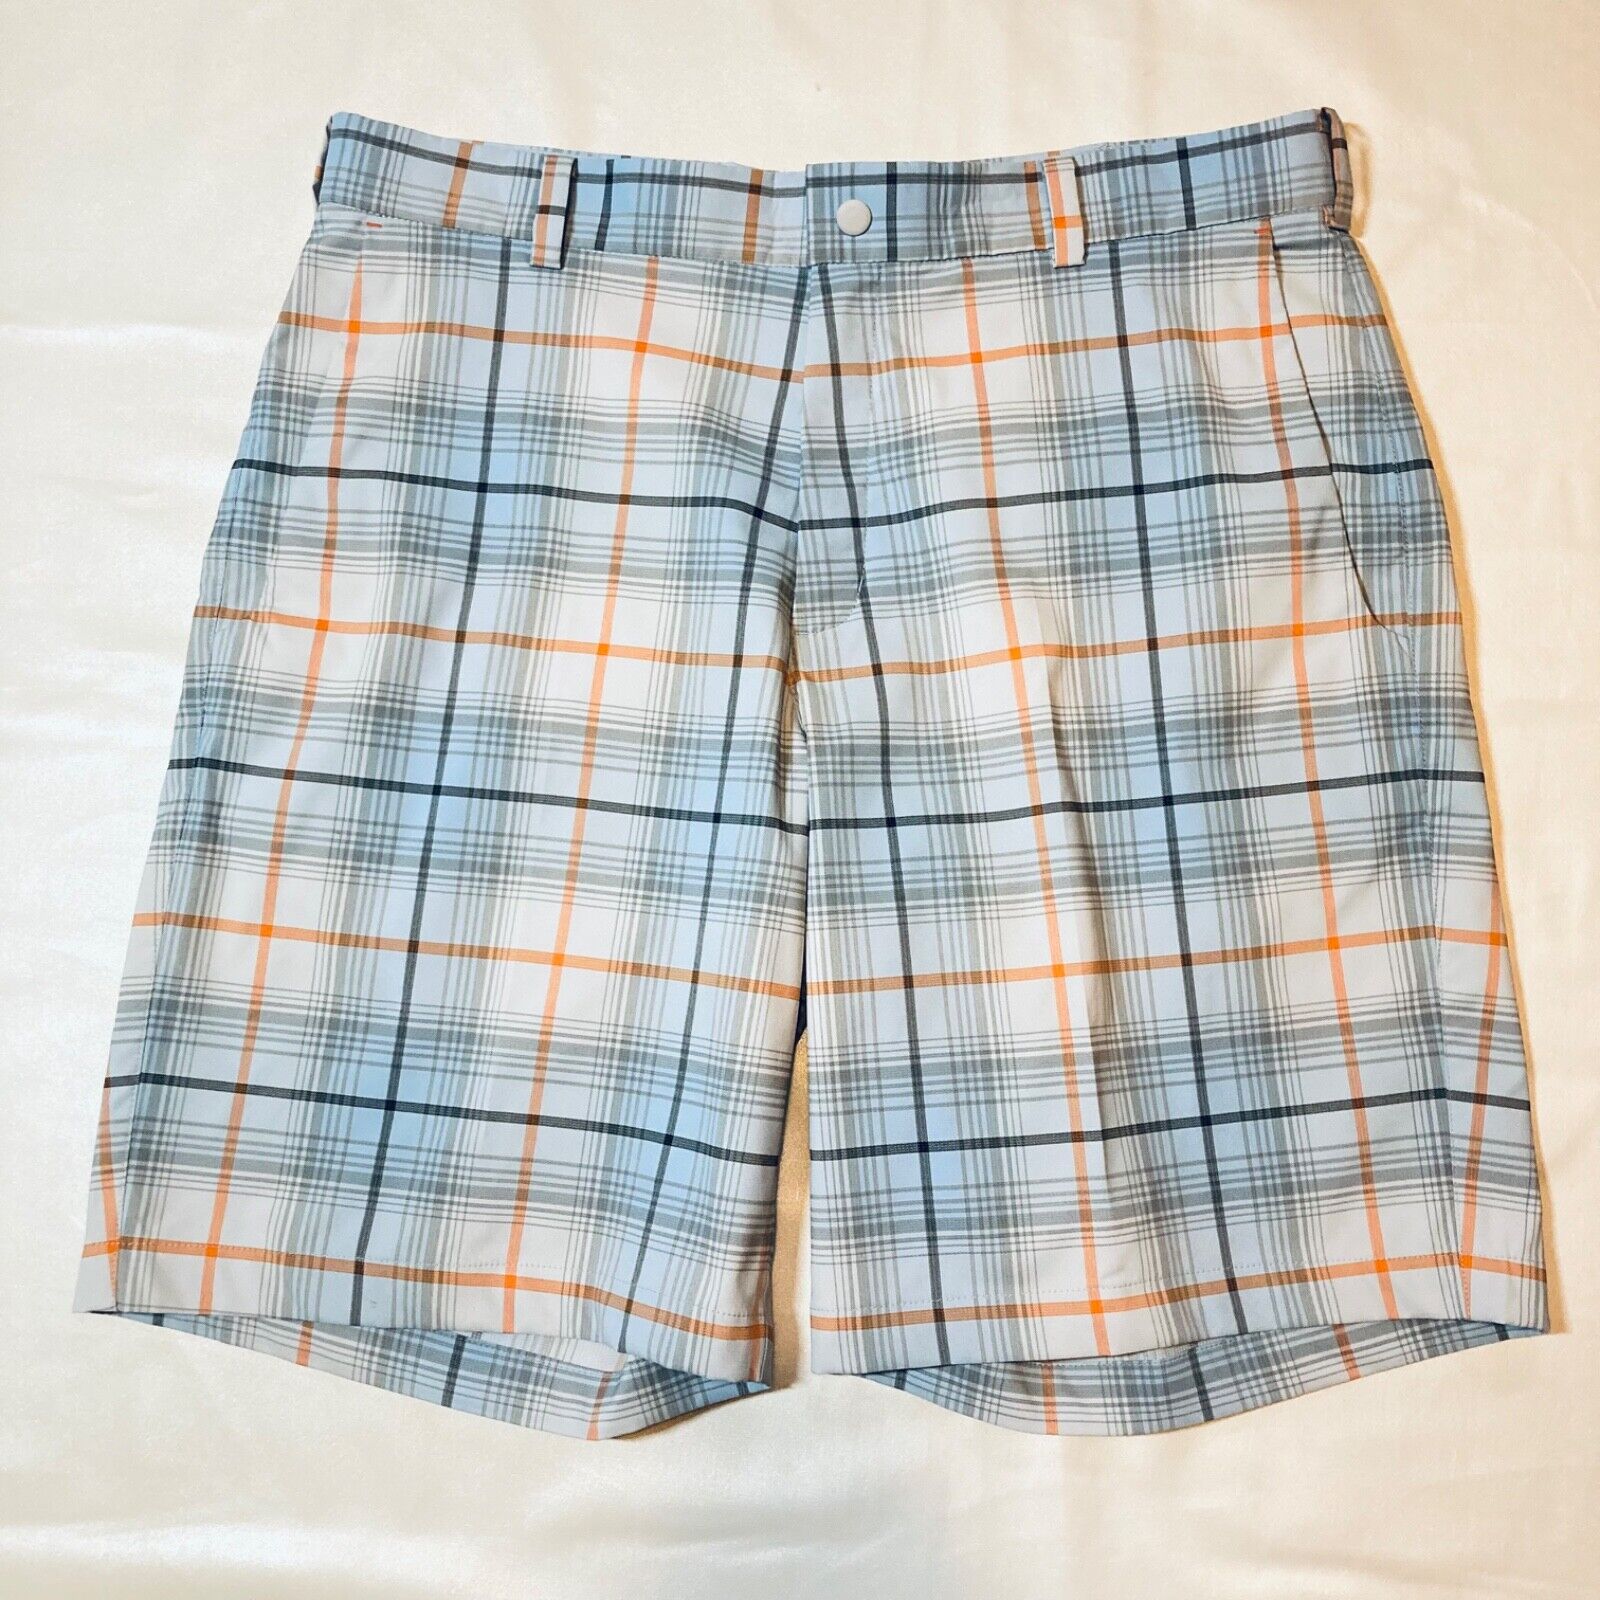 Nike Golf Shorts Men's 34 Blue Orange Plaid Dri-fit 32”waist 9”inseam Outdoor